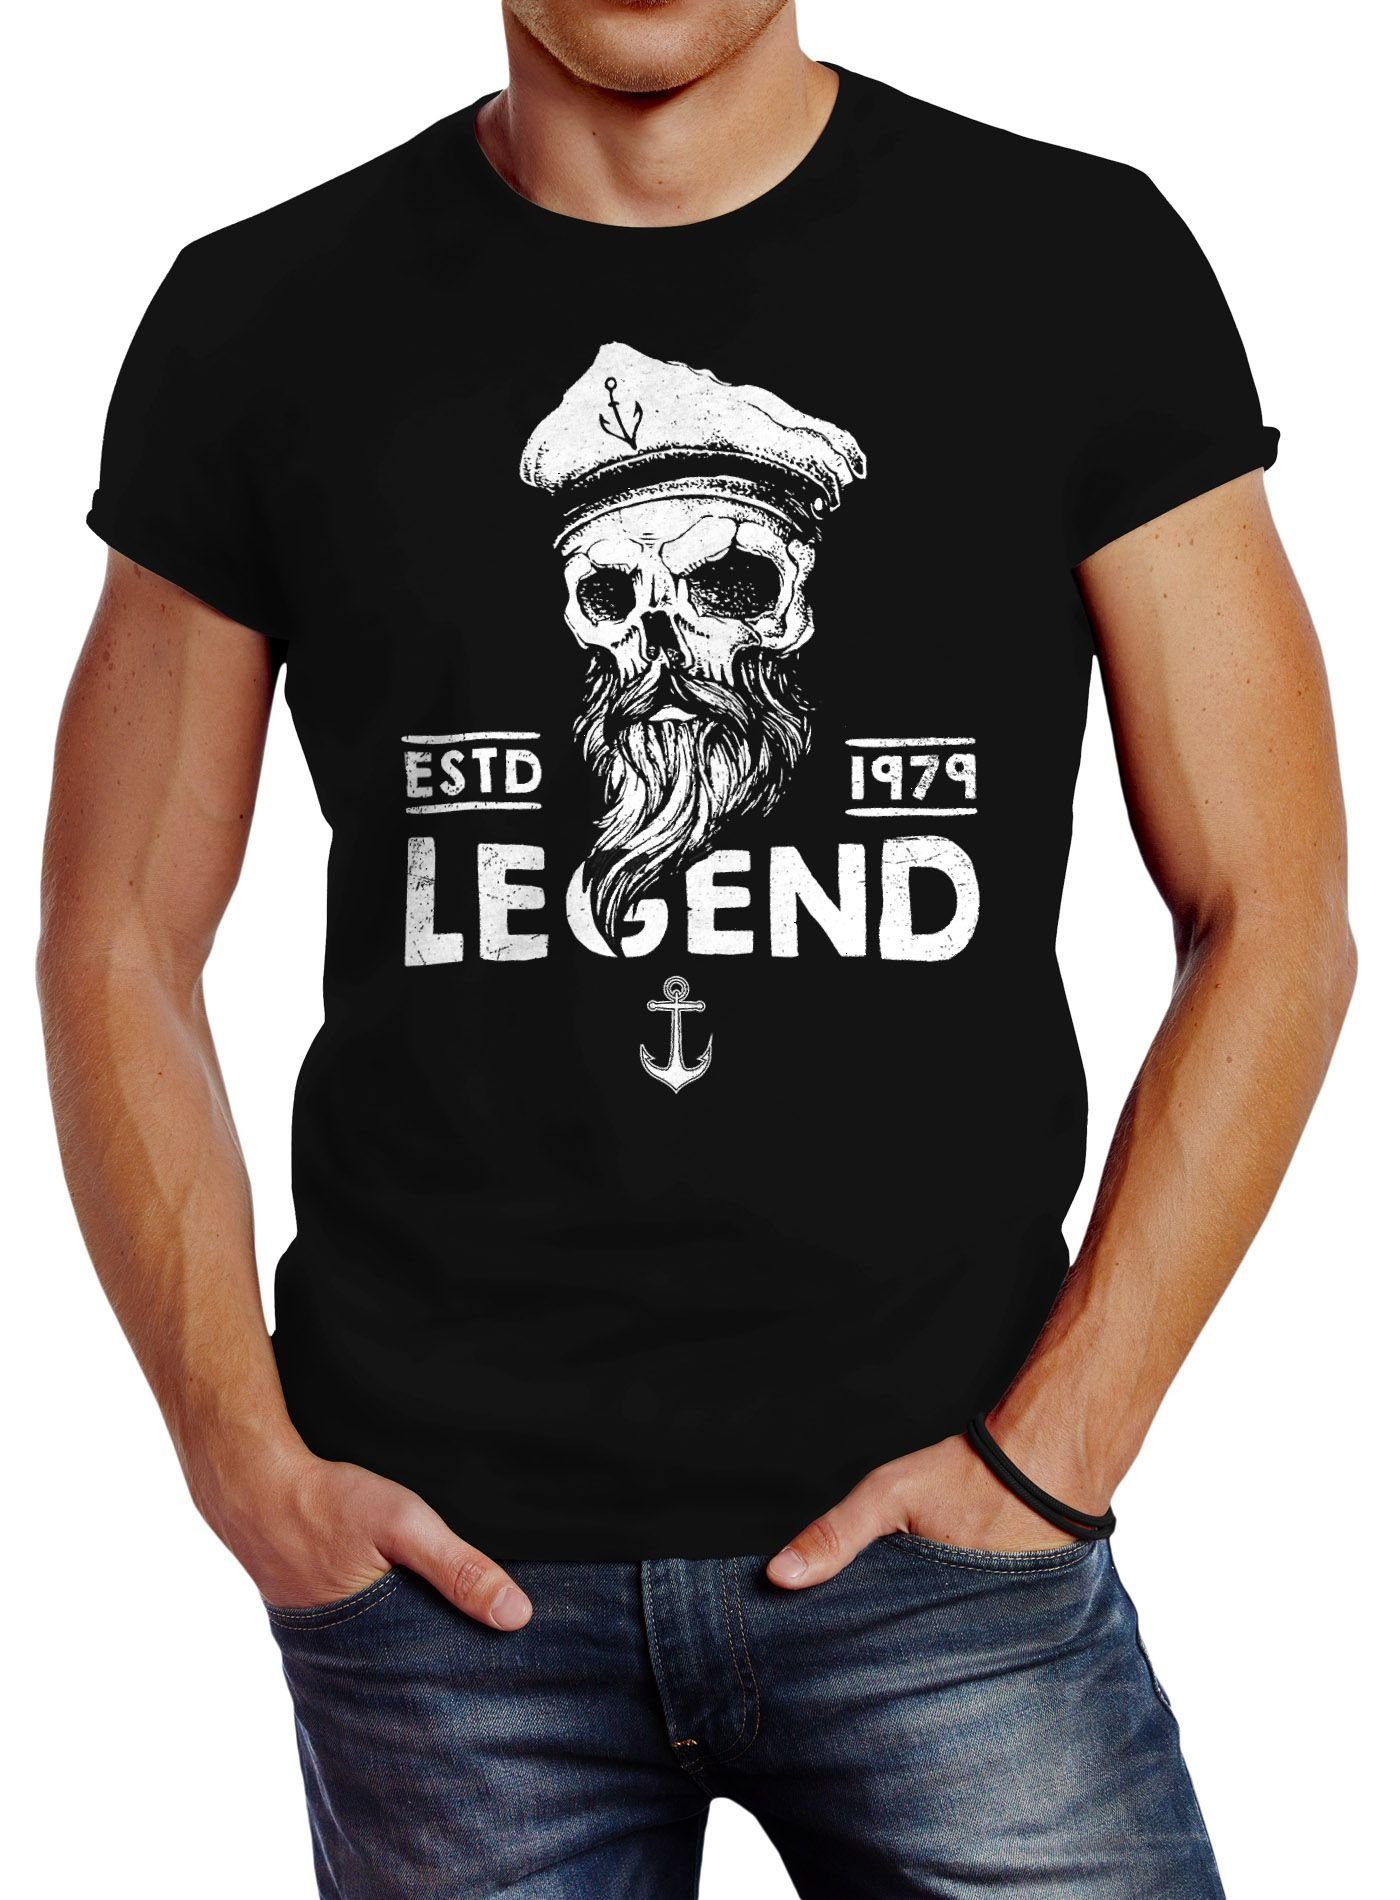 Neverless Print-Shirt Herren Kapitän Print mit Captain Skull Bart Totenkopf Fit Slim schwarz Neverless® T-Shirt Legend